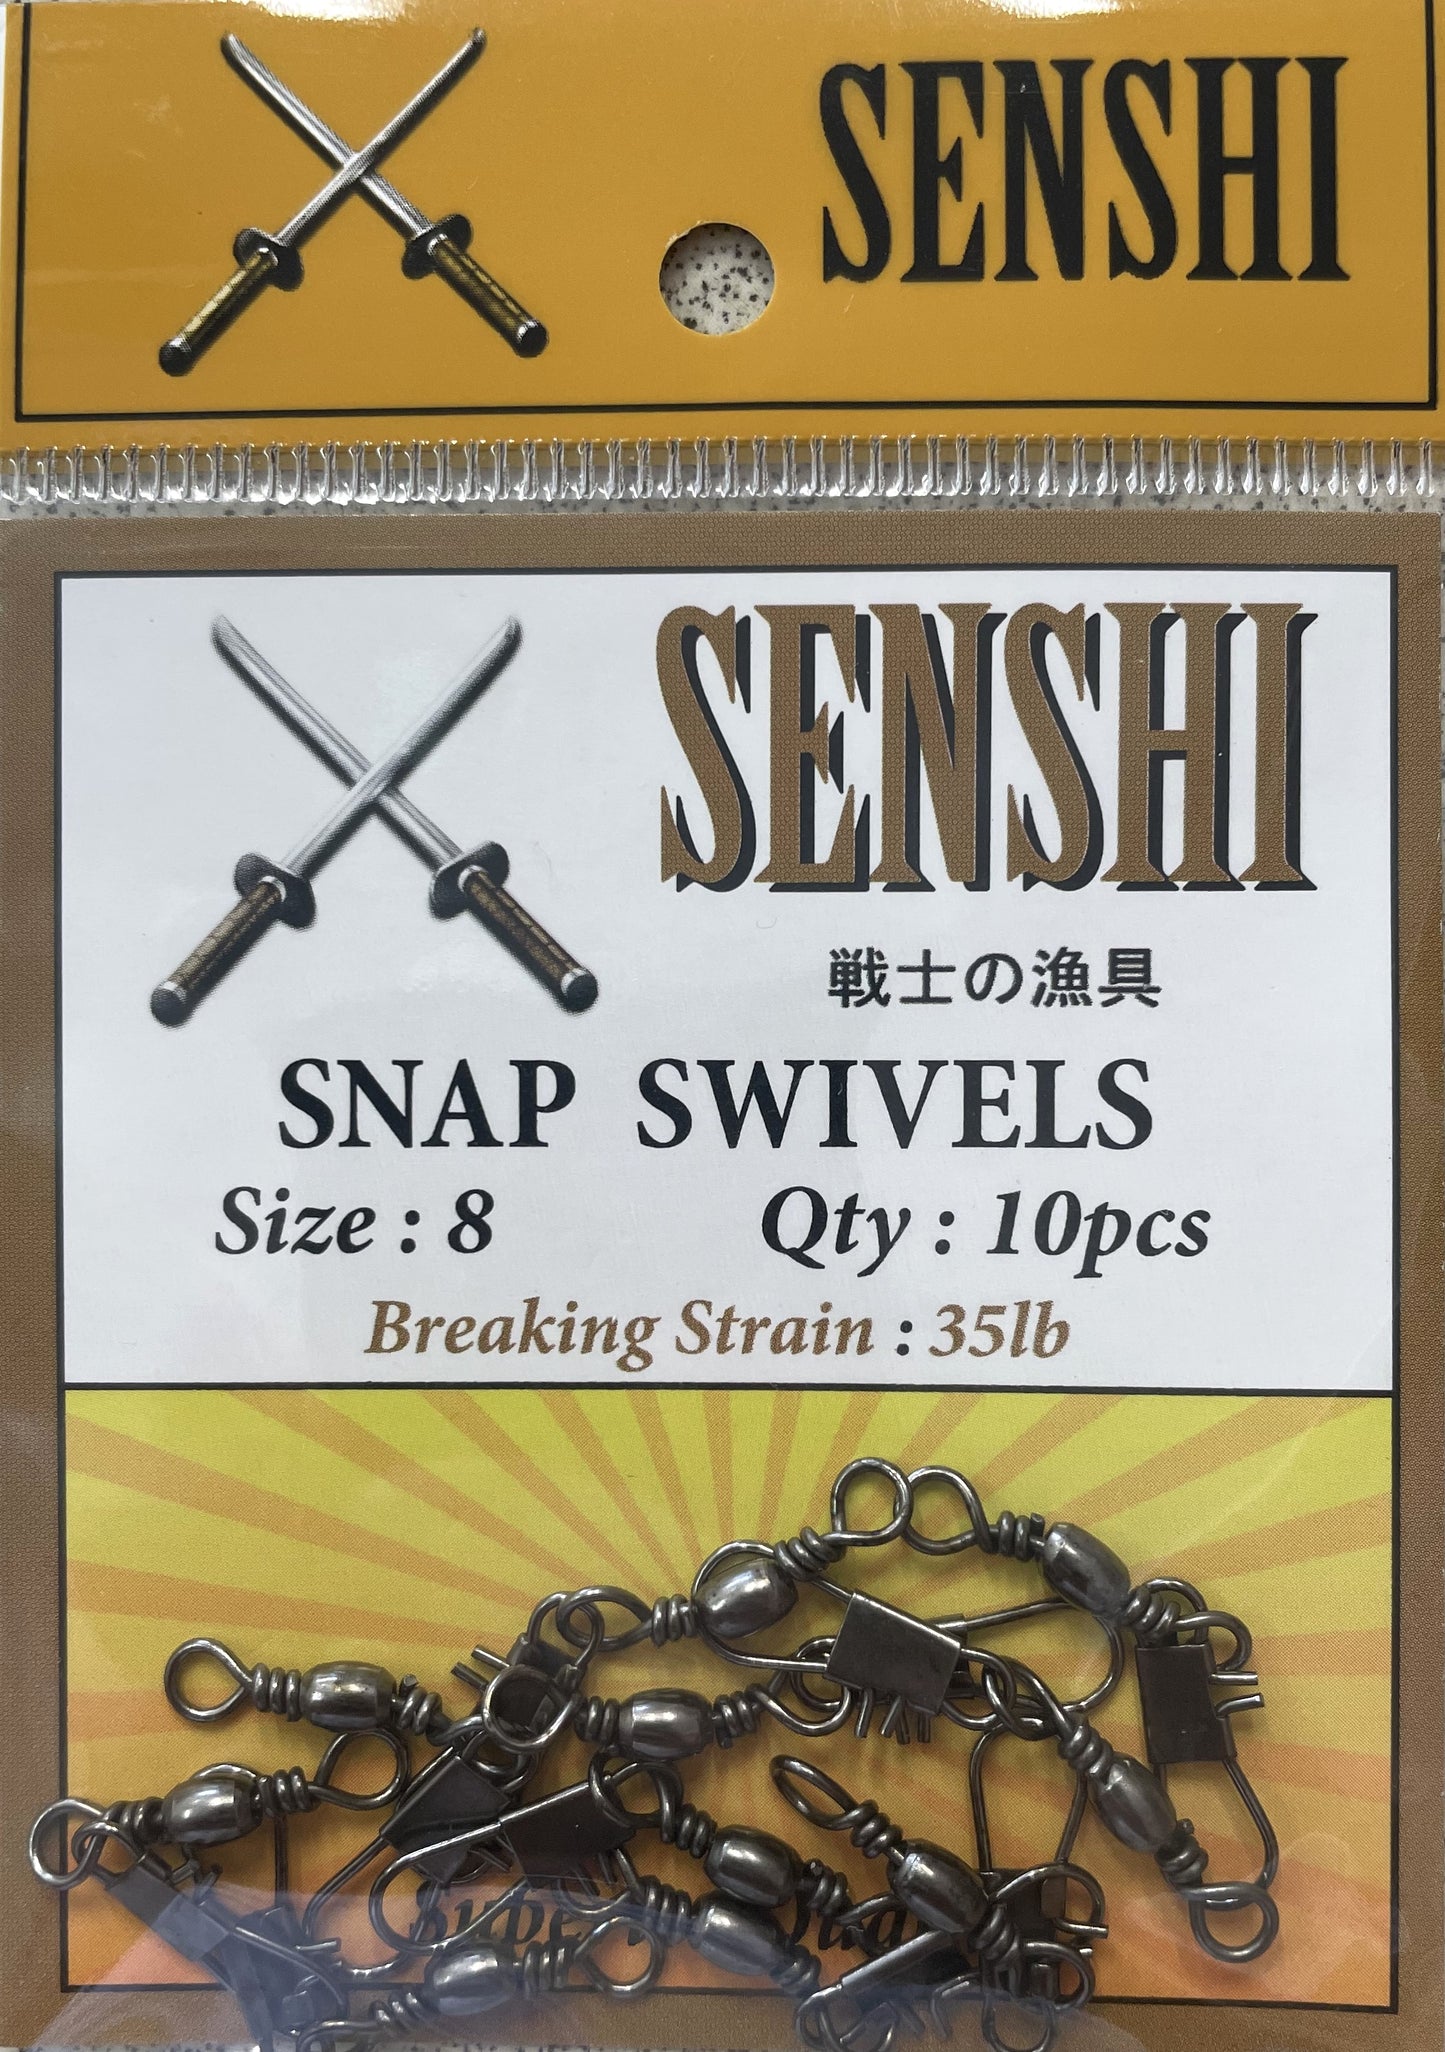 Senshi Snap Swivels - Size 8